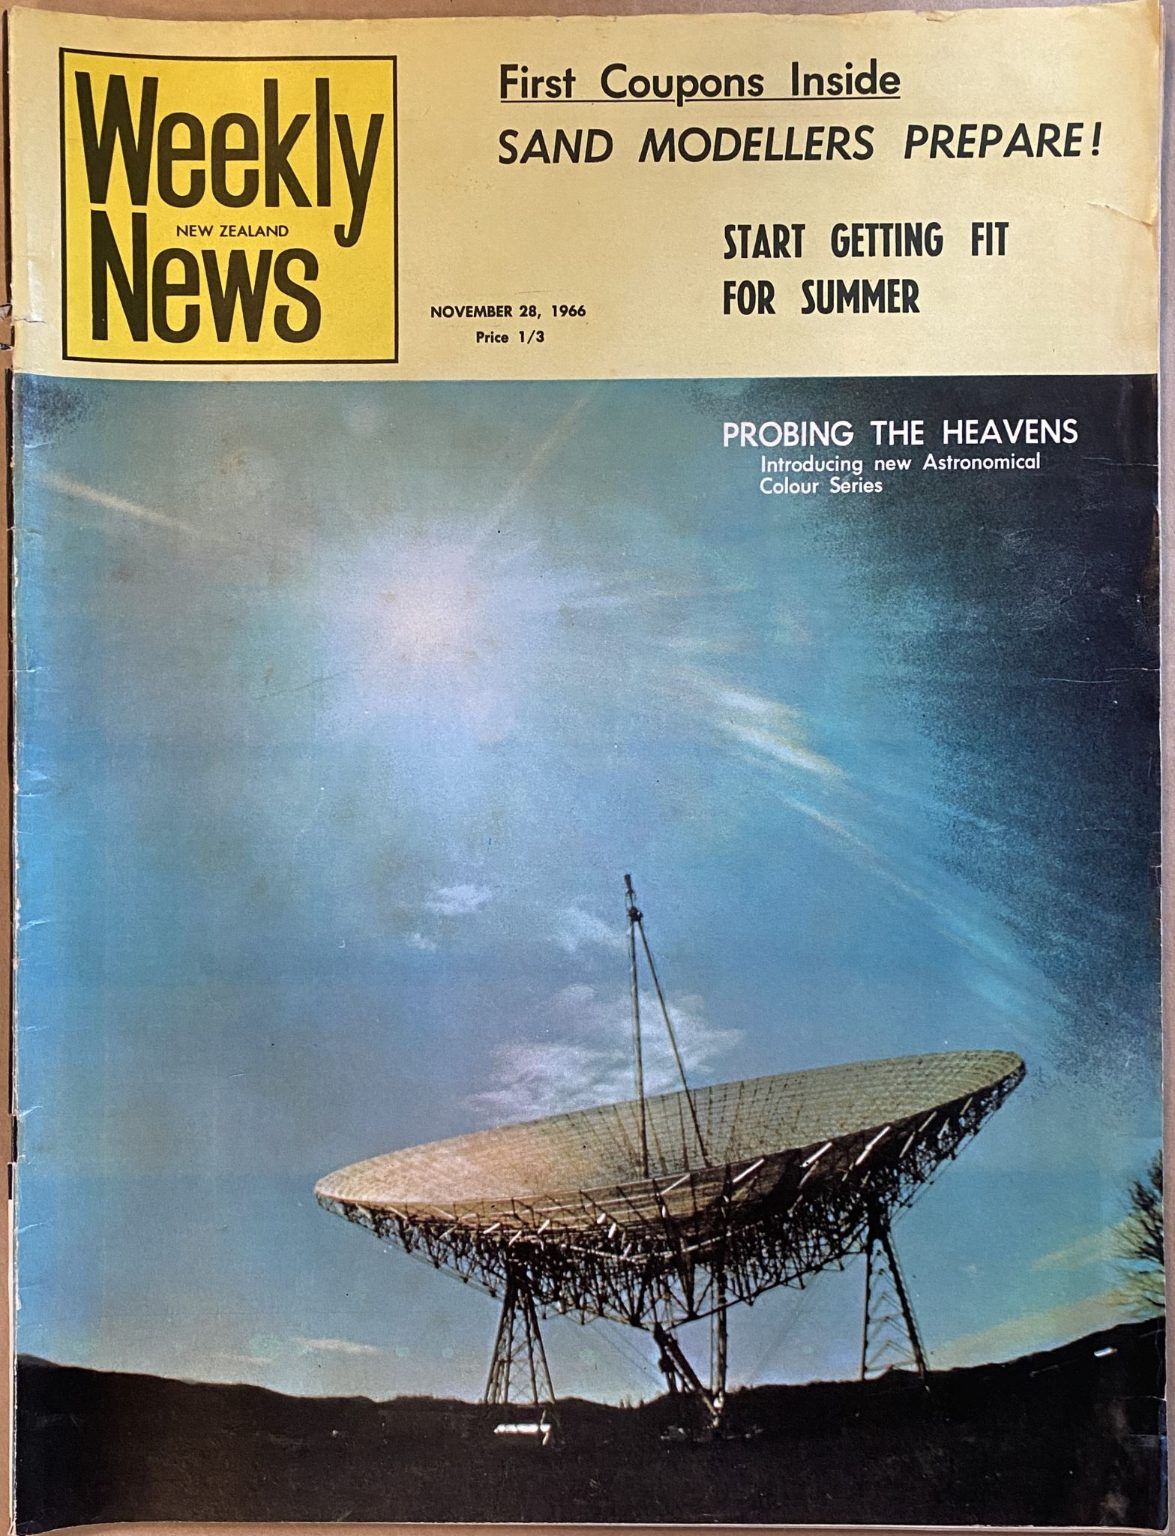 OLD NEWSPAPER: New Zealand Weekly News, No. 5375, 28 November 1966